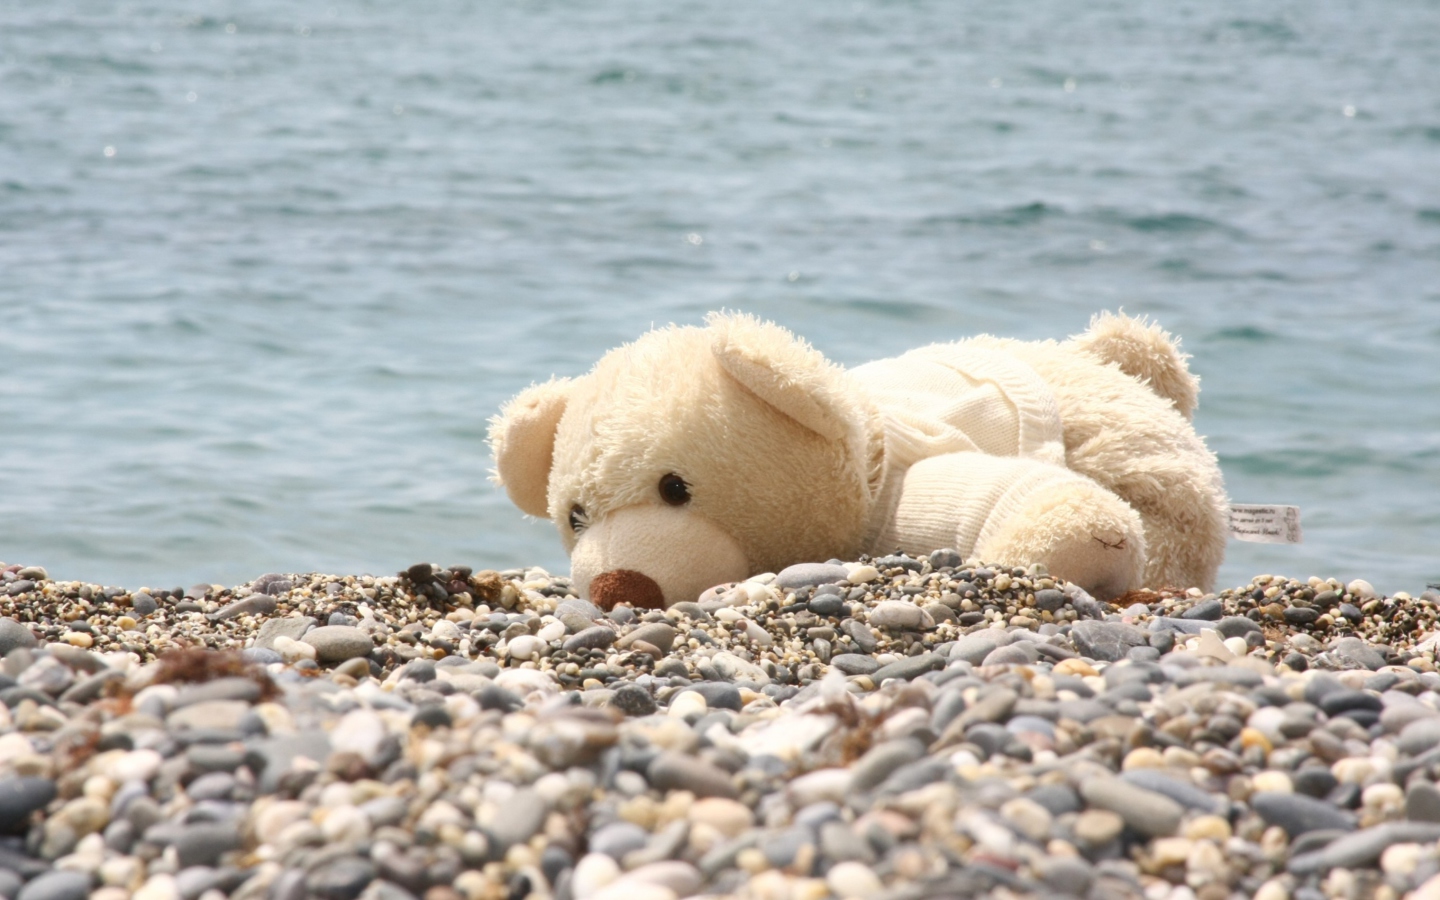 White Teddy Forgotten On Beach wallpaper 1440x900